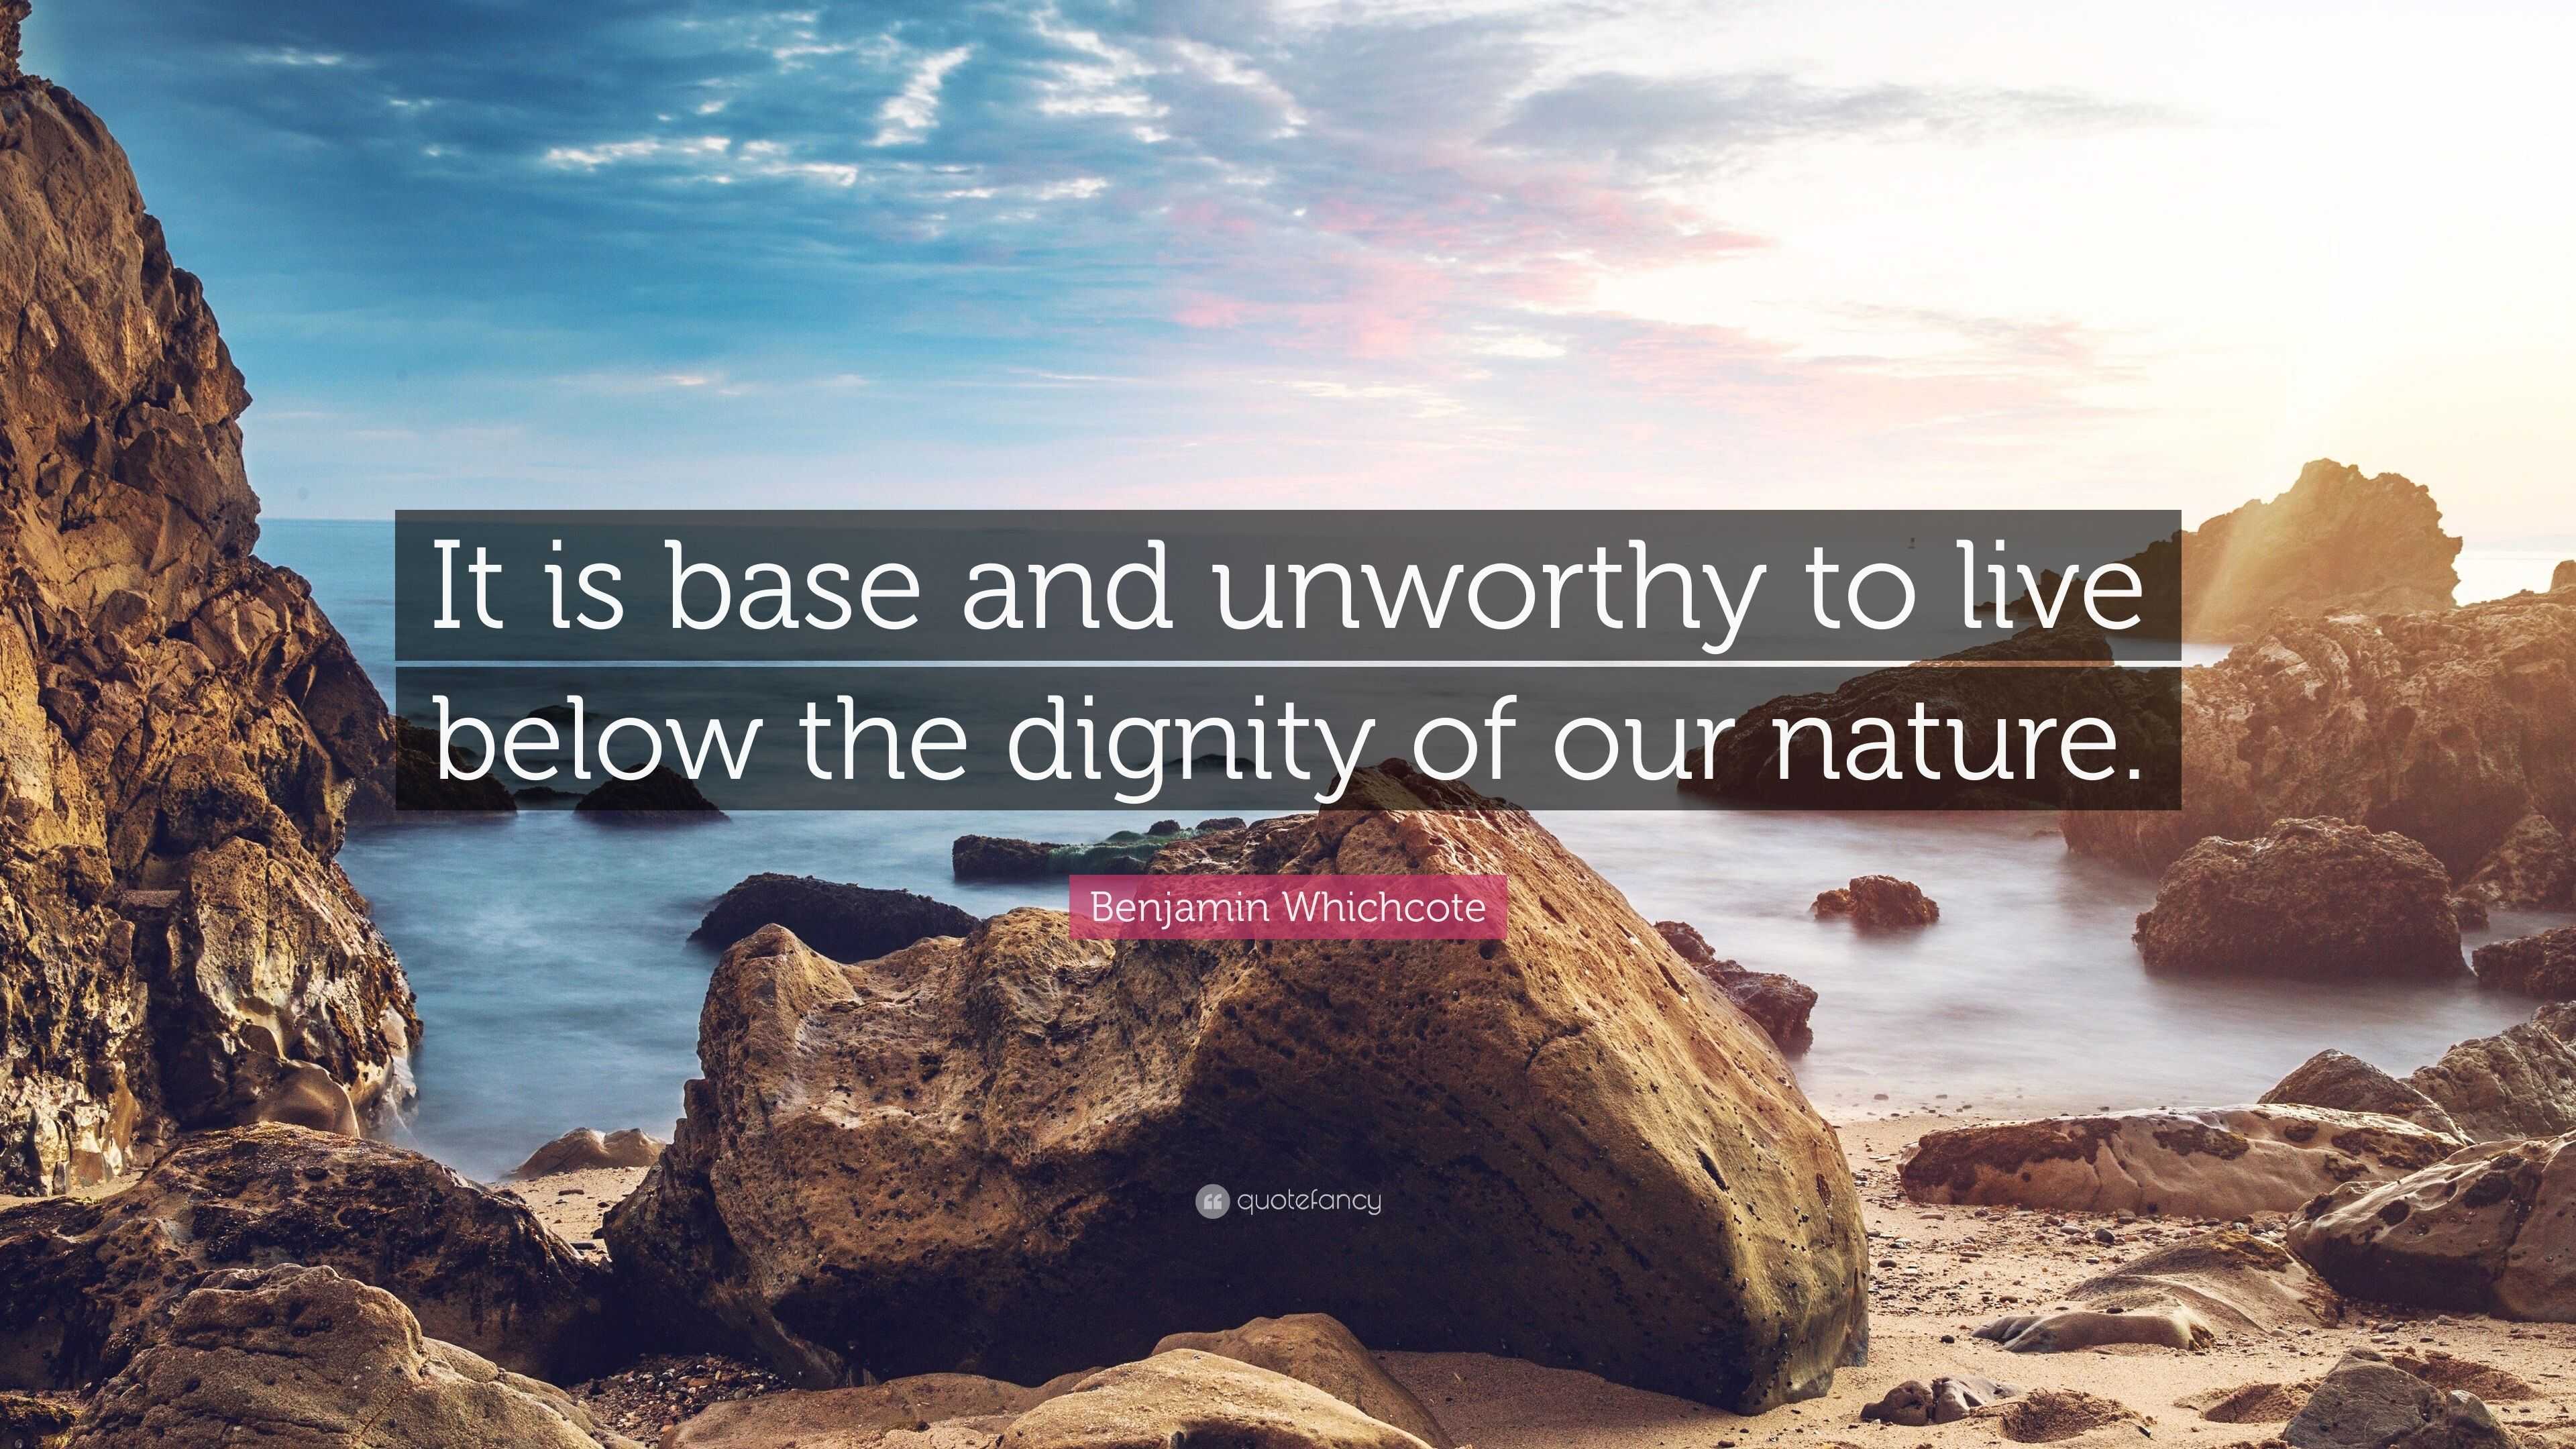 Benjamin Whichcote Quote: “It is base and unworthy to live below the ...